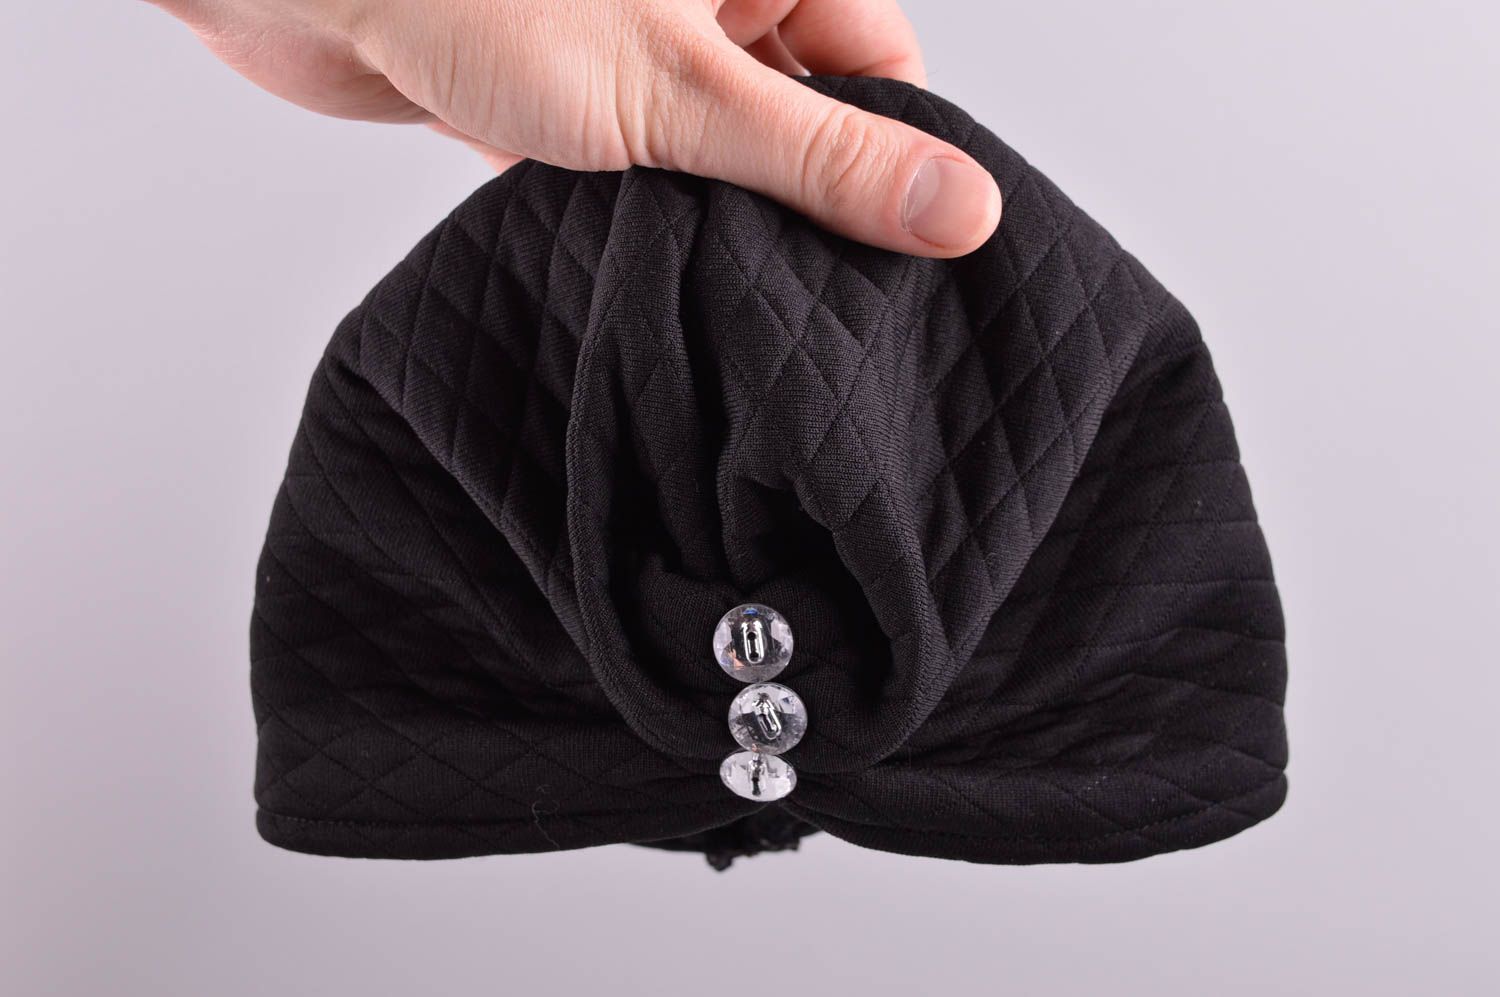 Handmade winter hat fabric hats black warm hat winter accessories for women photo 5